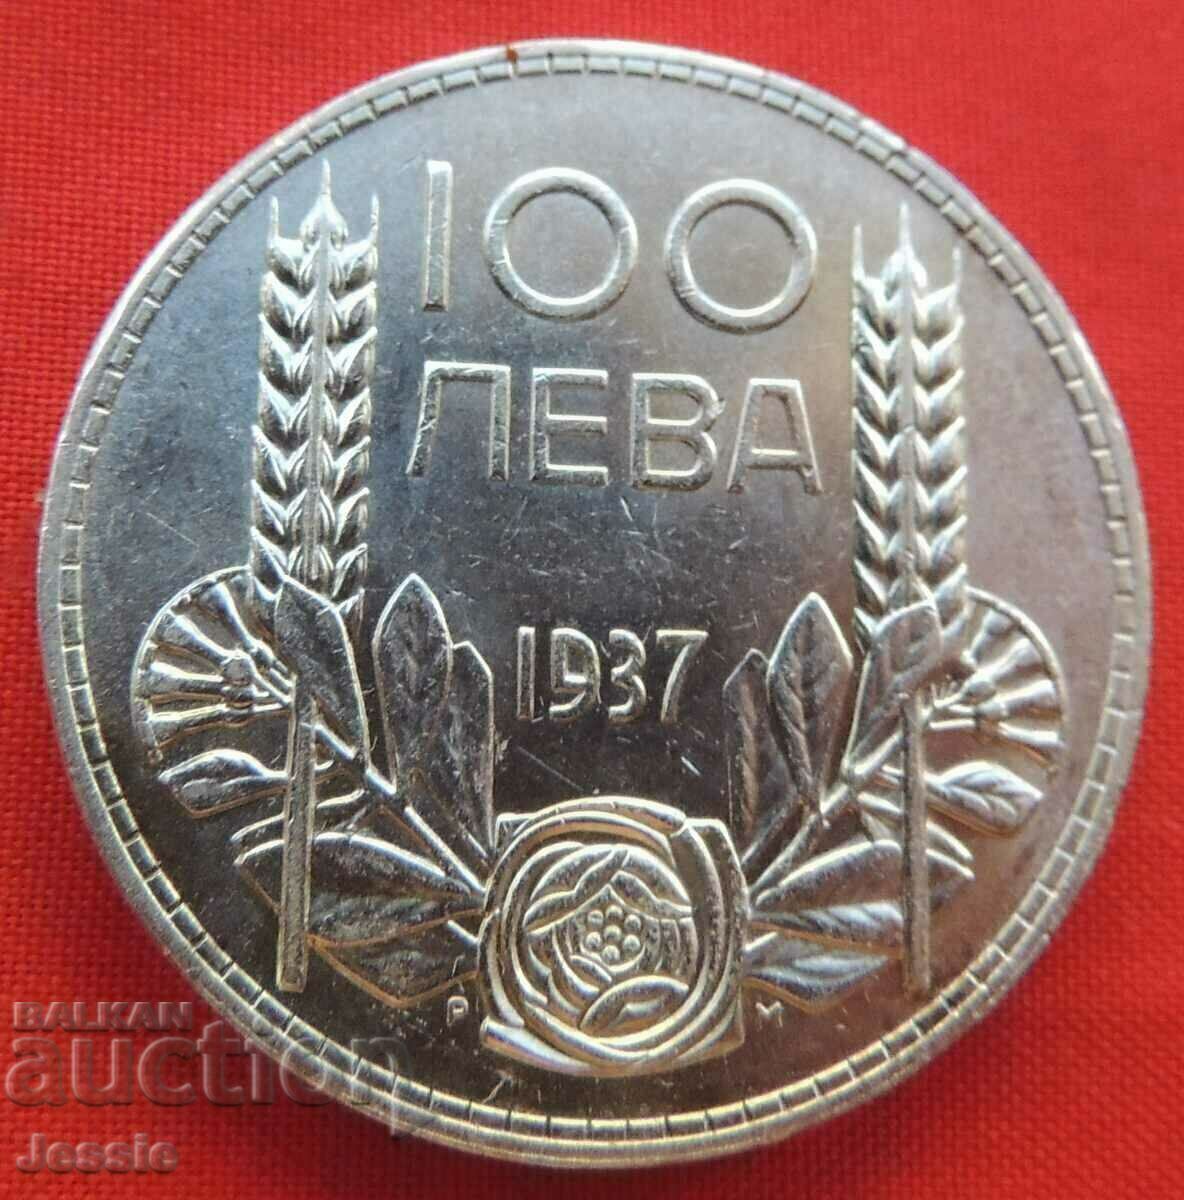 100 лева 1937 Качество Xtra Матр гланц Изобилие коса мустаци